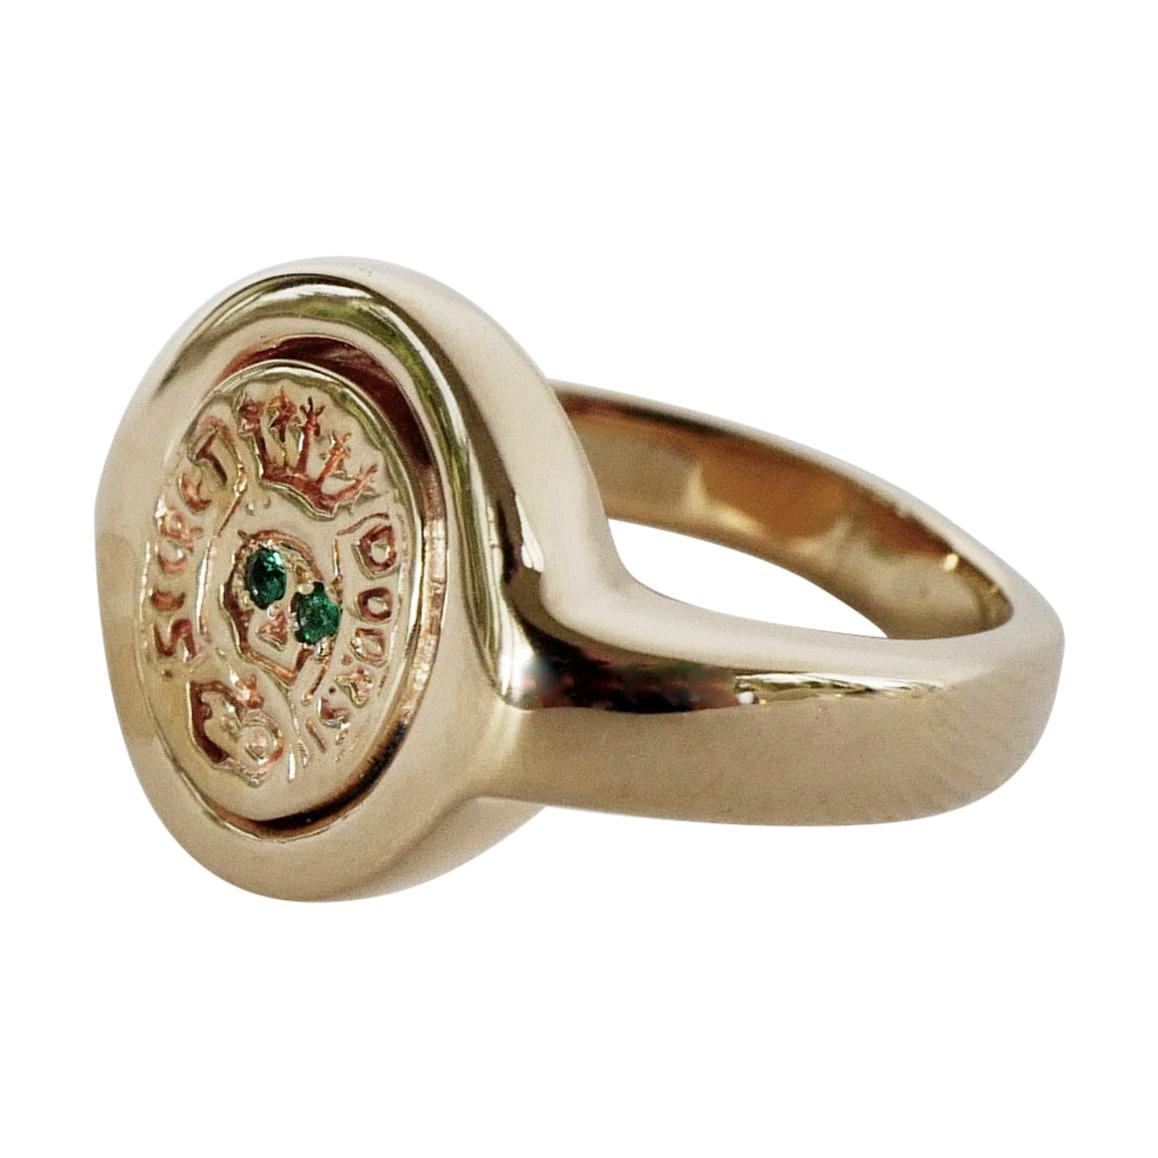 Crest Signet Ring Emerald Memento Mori Style Skull 14k Gold Vermeil J Dauphin
J DAUPHIN signature piece 